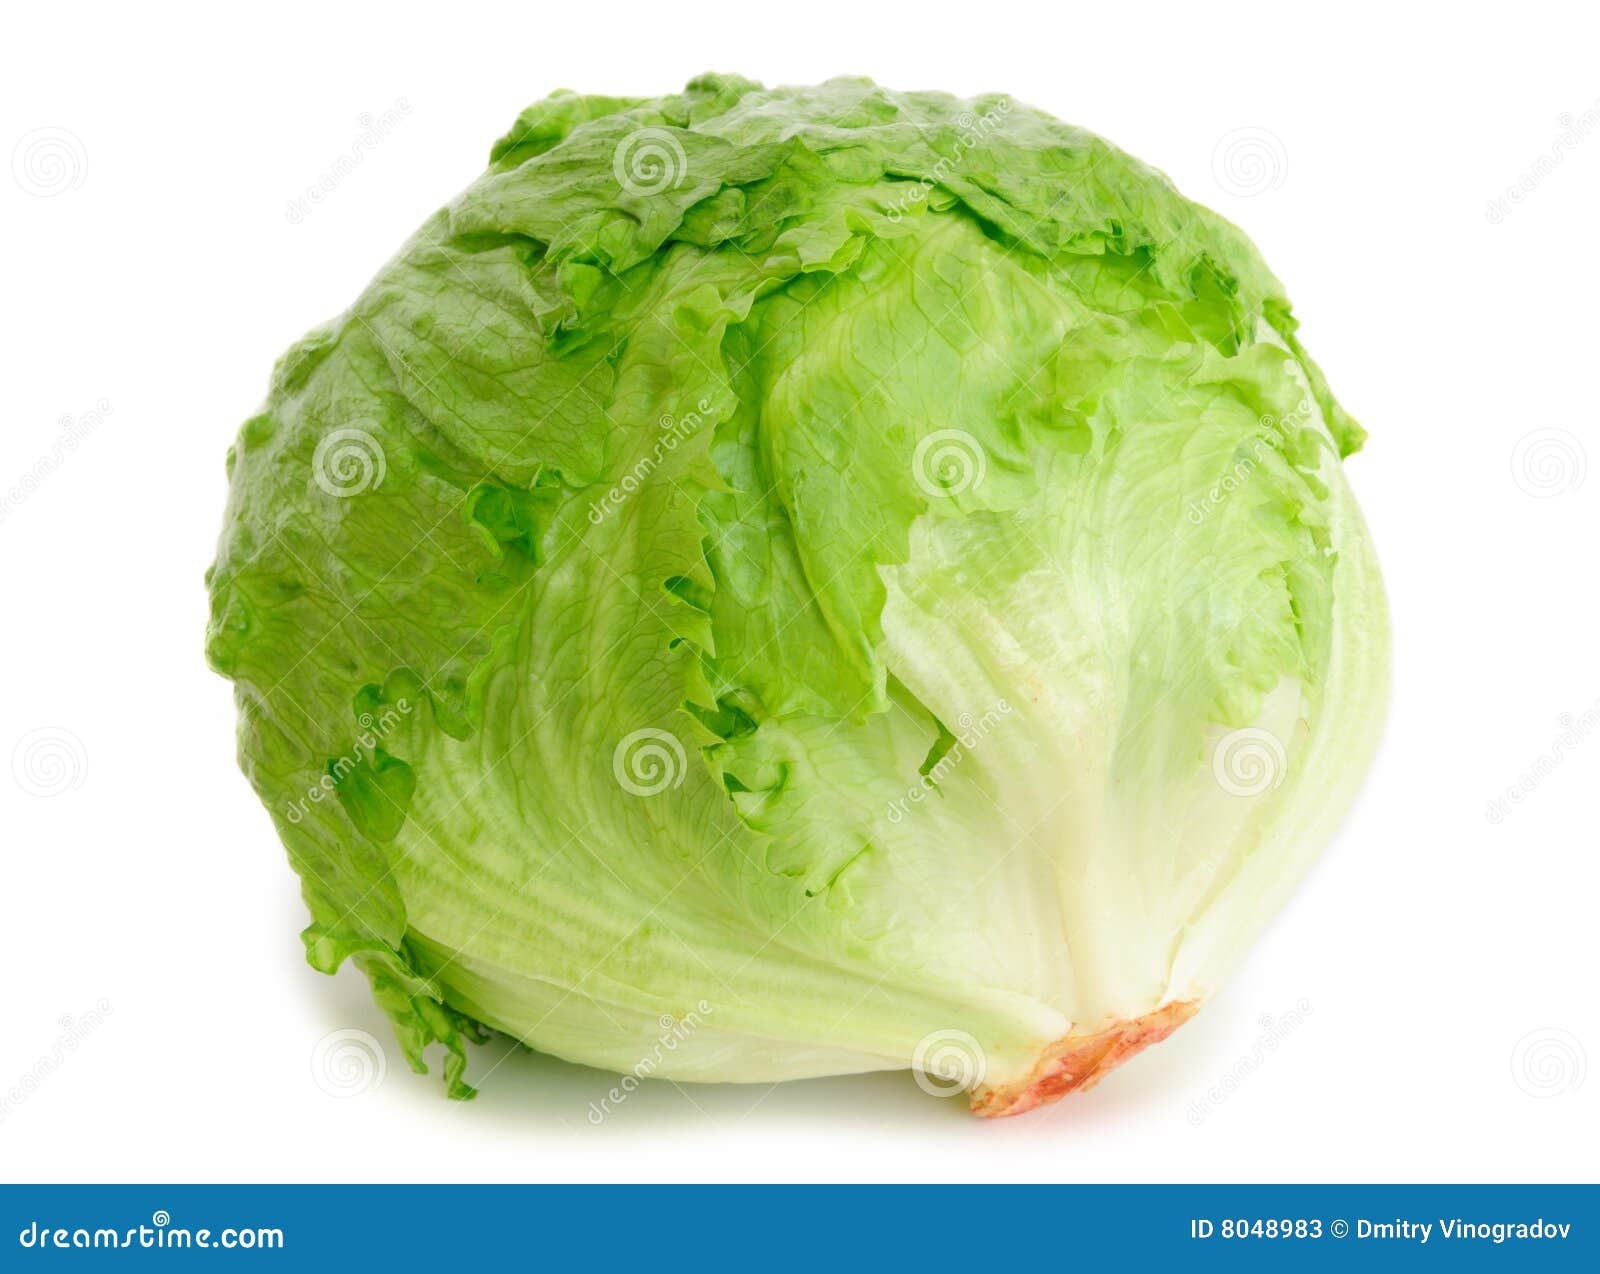 cabbage lettuce